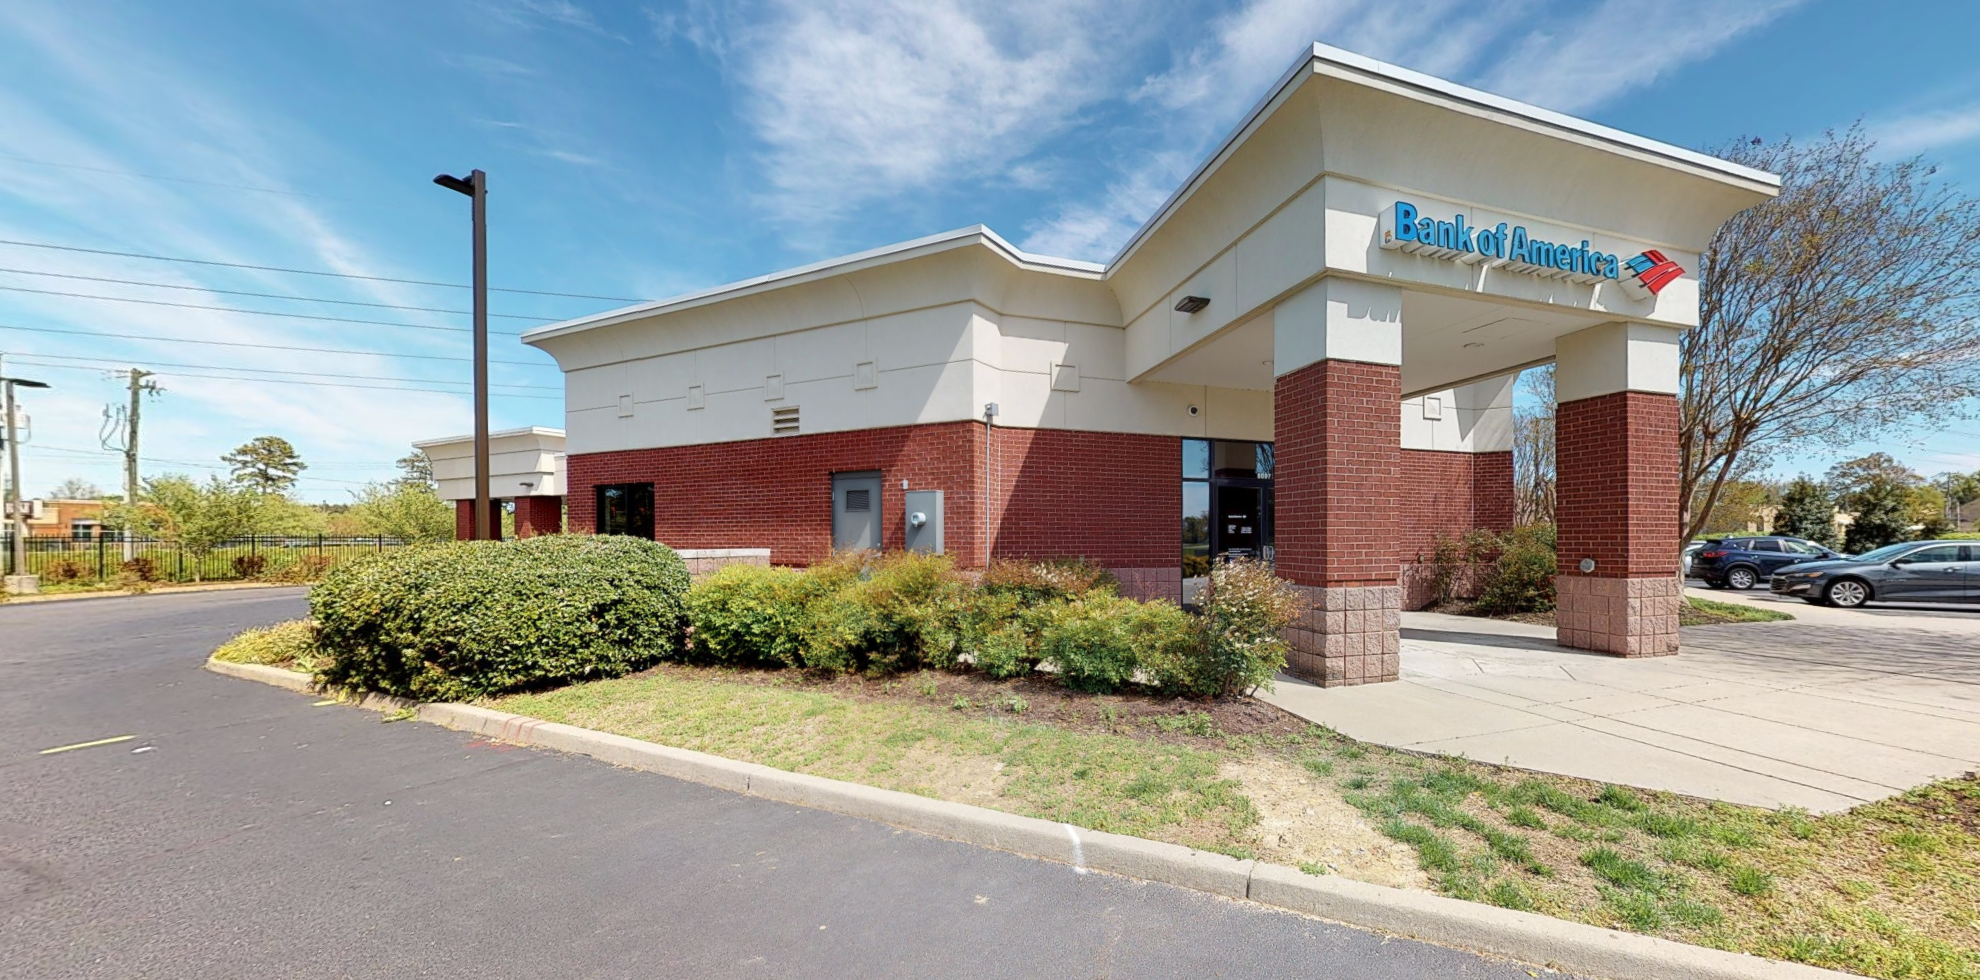 Bank of America financial center with drive-thru ATM | 8097 Villa Park Dr, Richmond, VA 23228